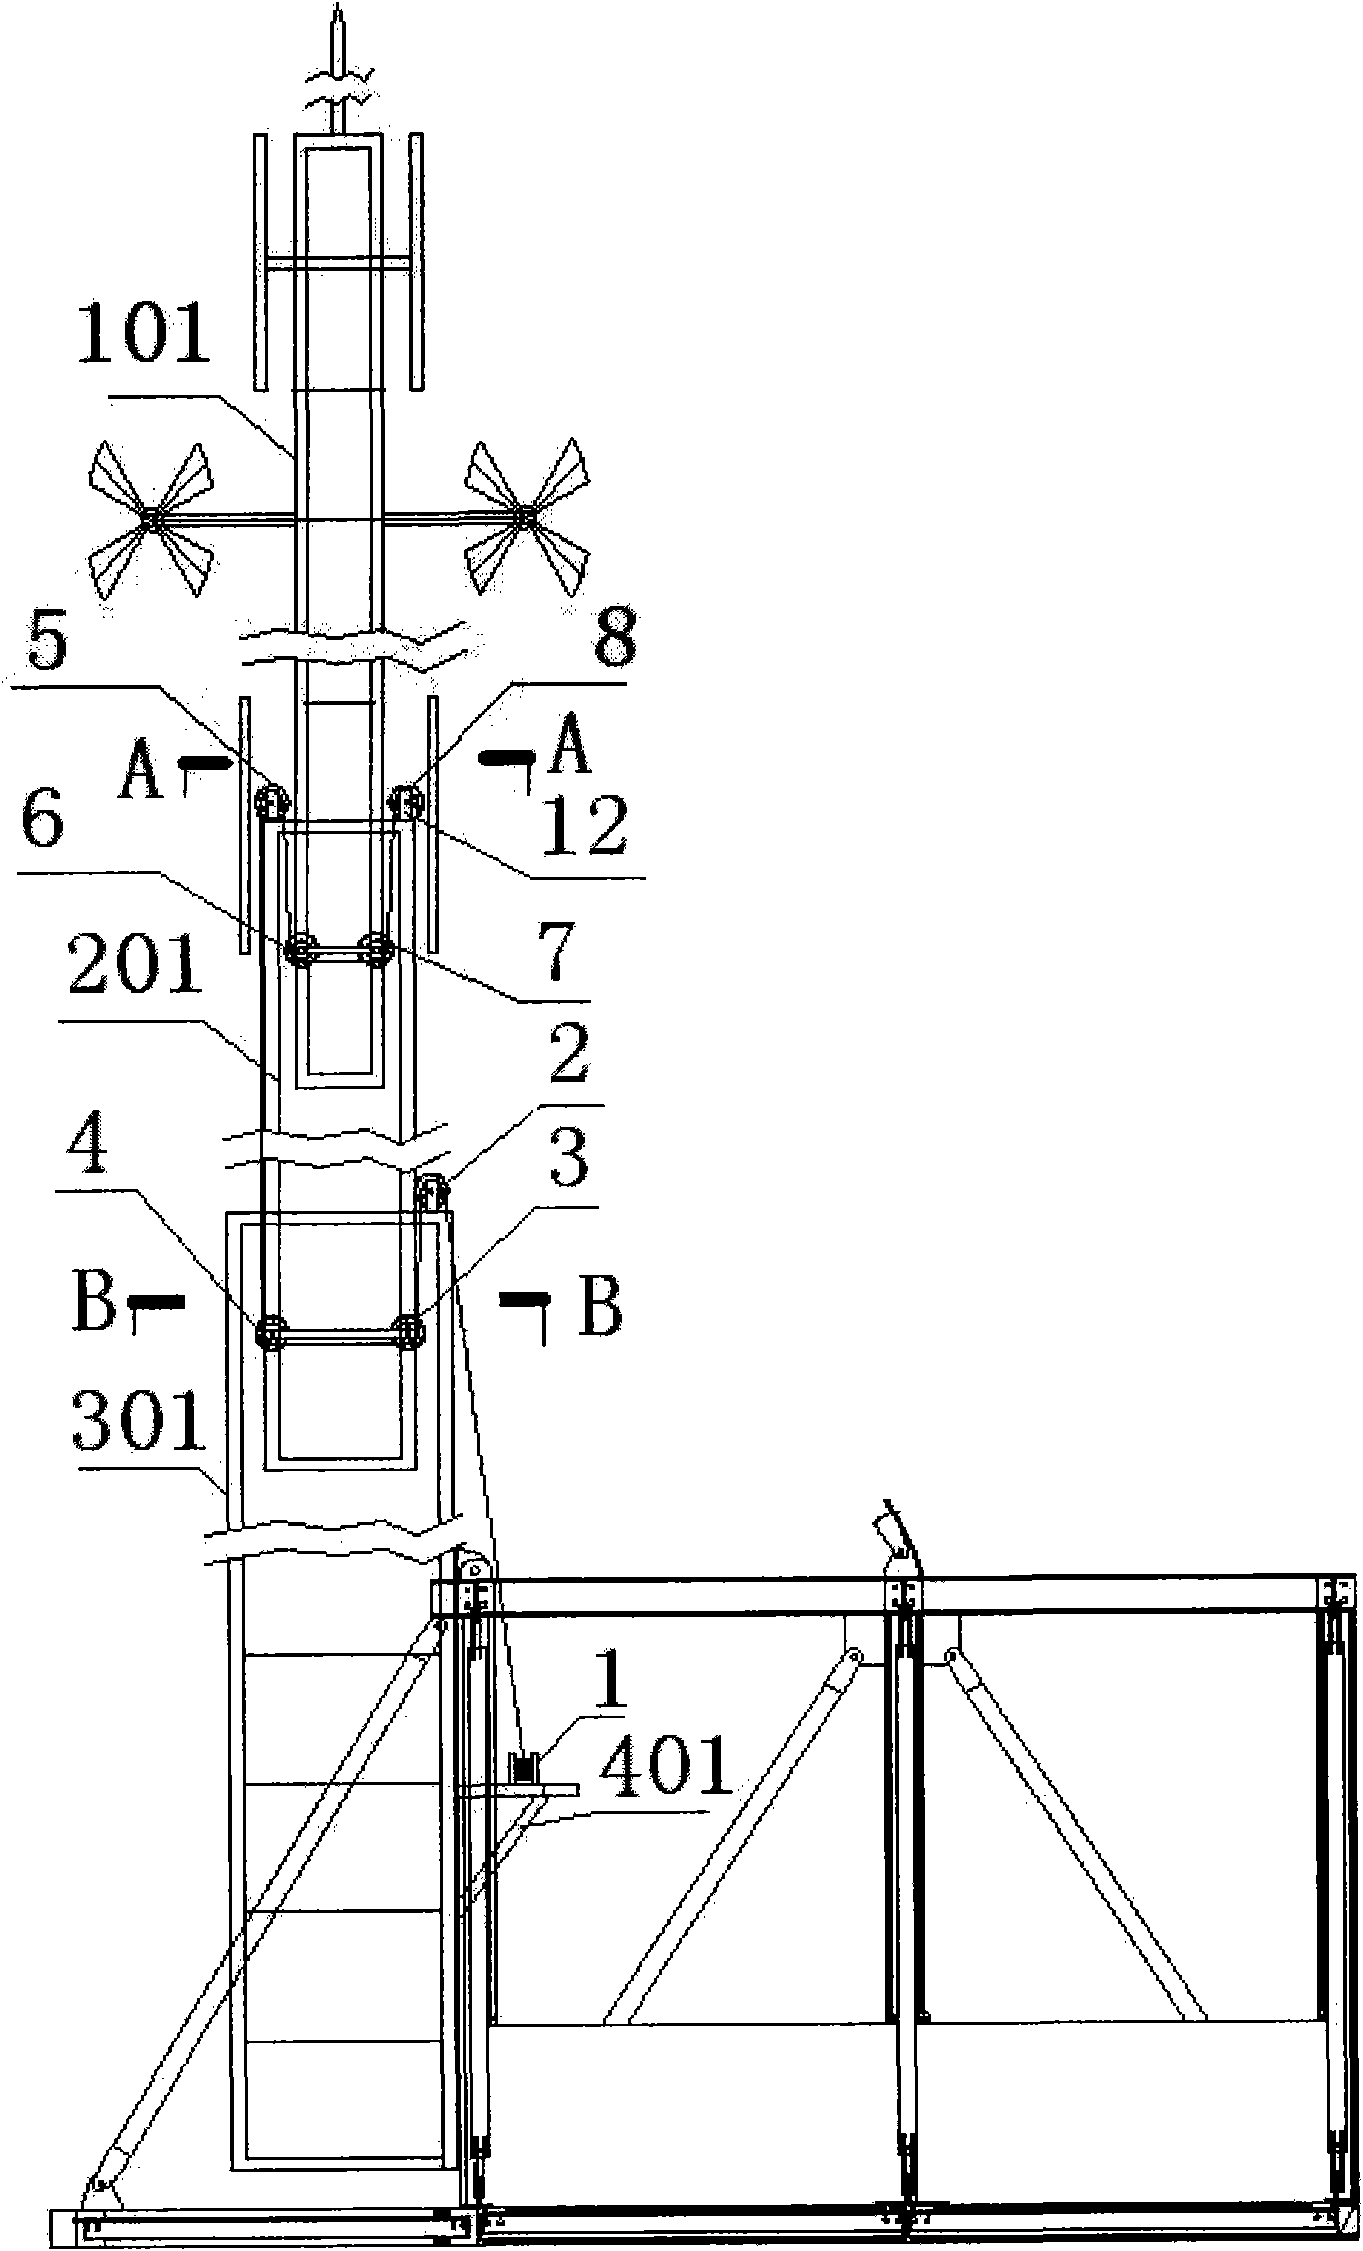 Lifting communication base station iron tower